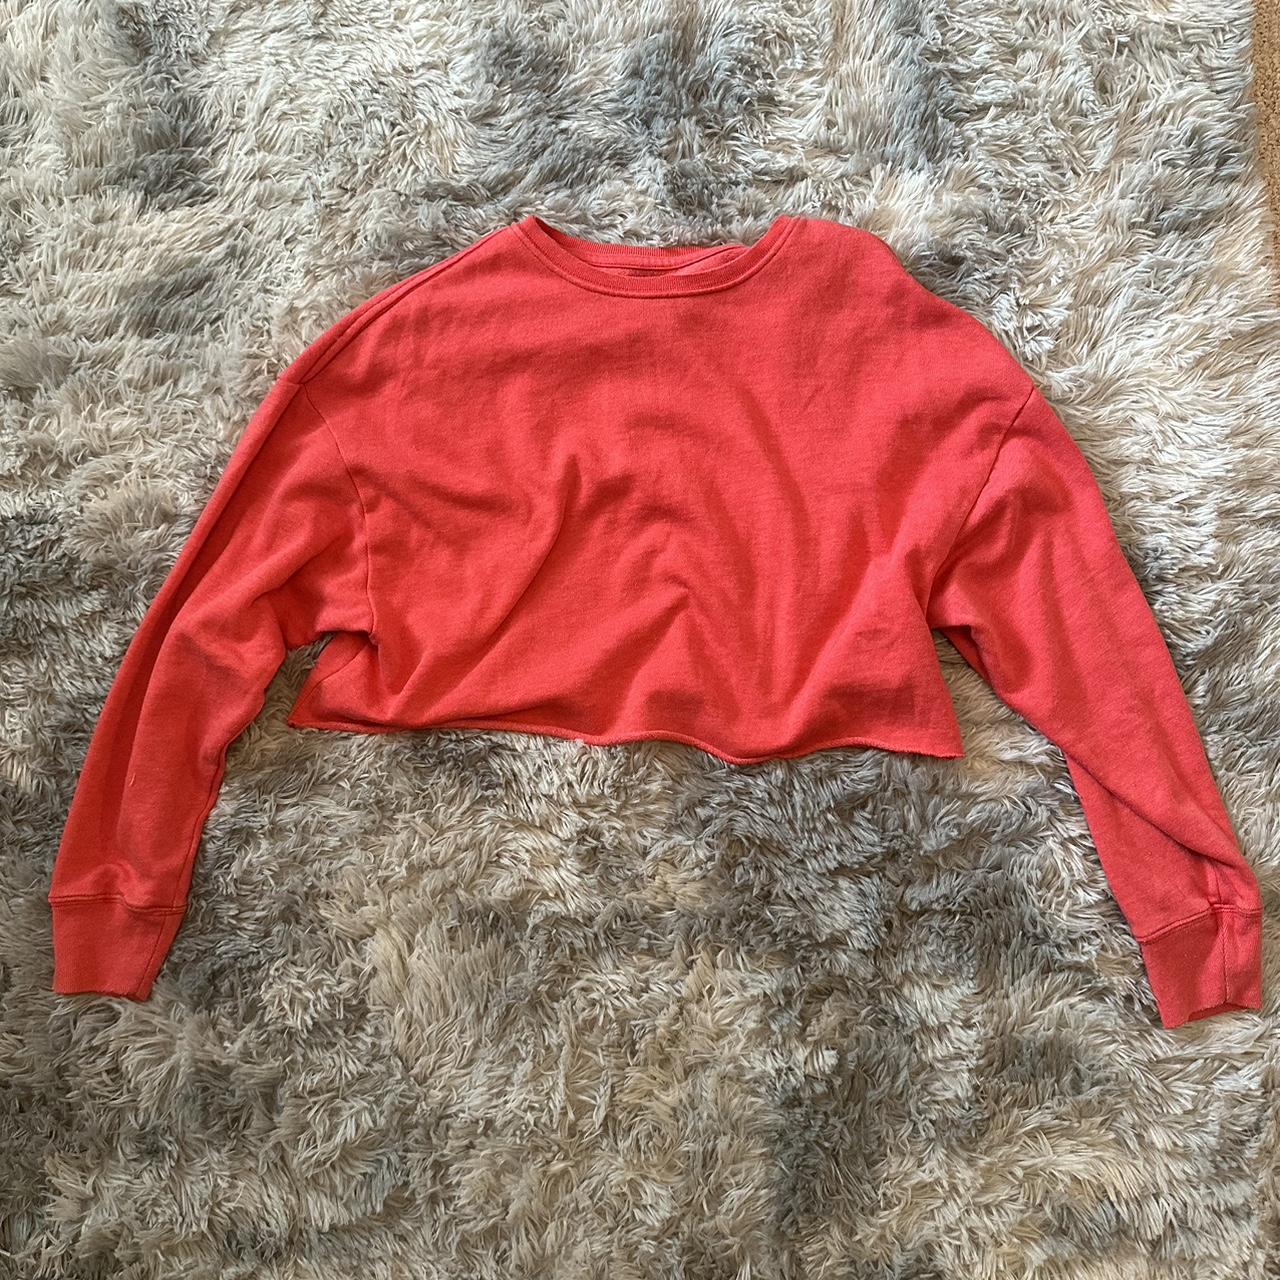 Bogs Women's Pink and Red Sweatshirt